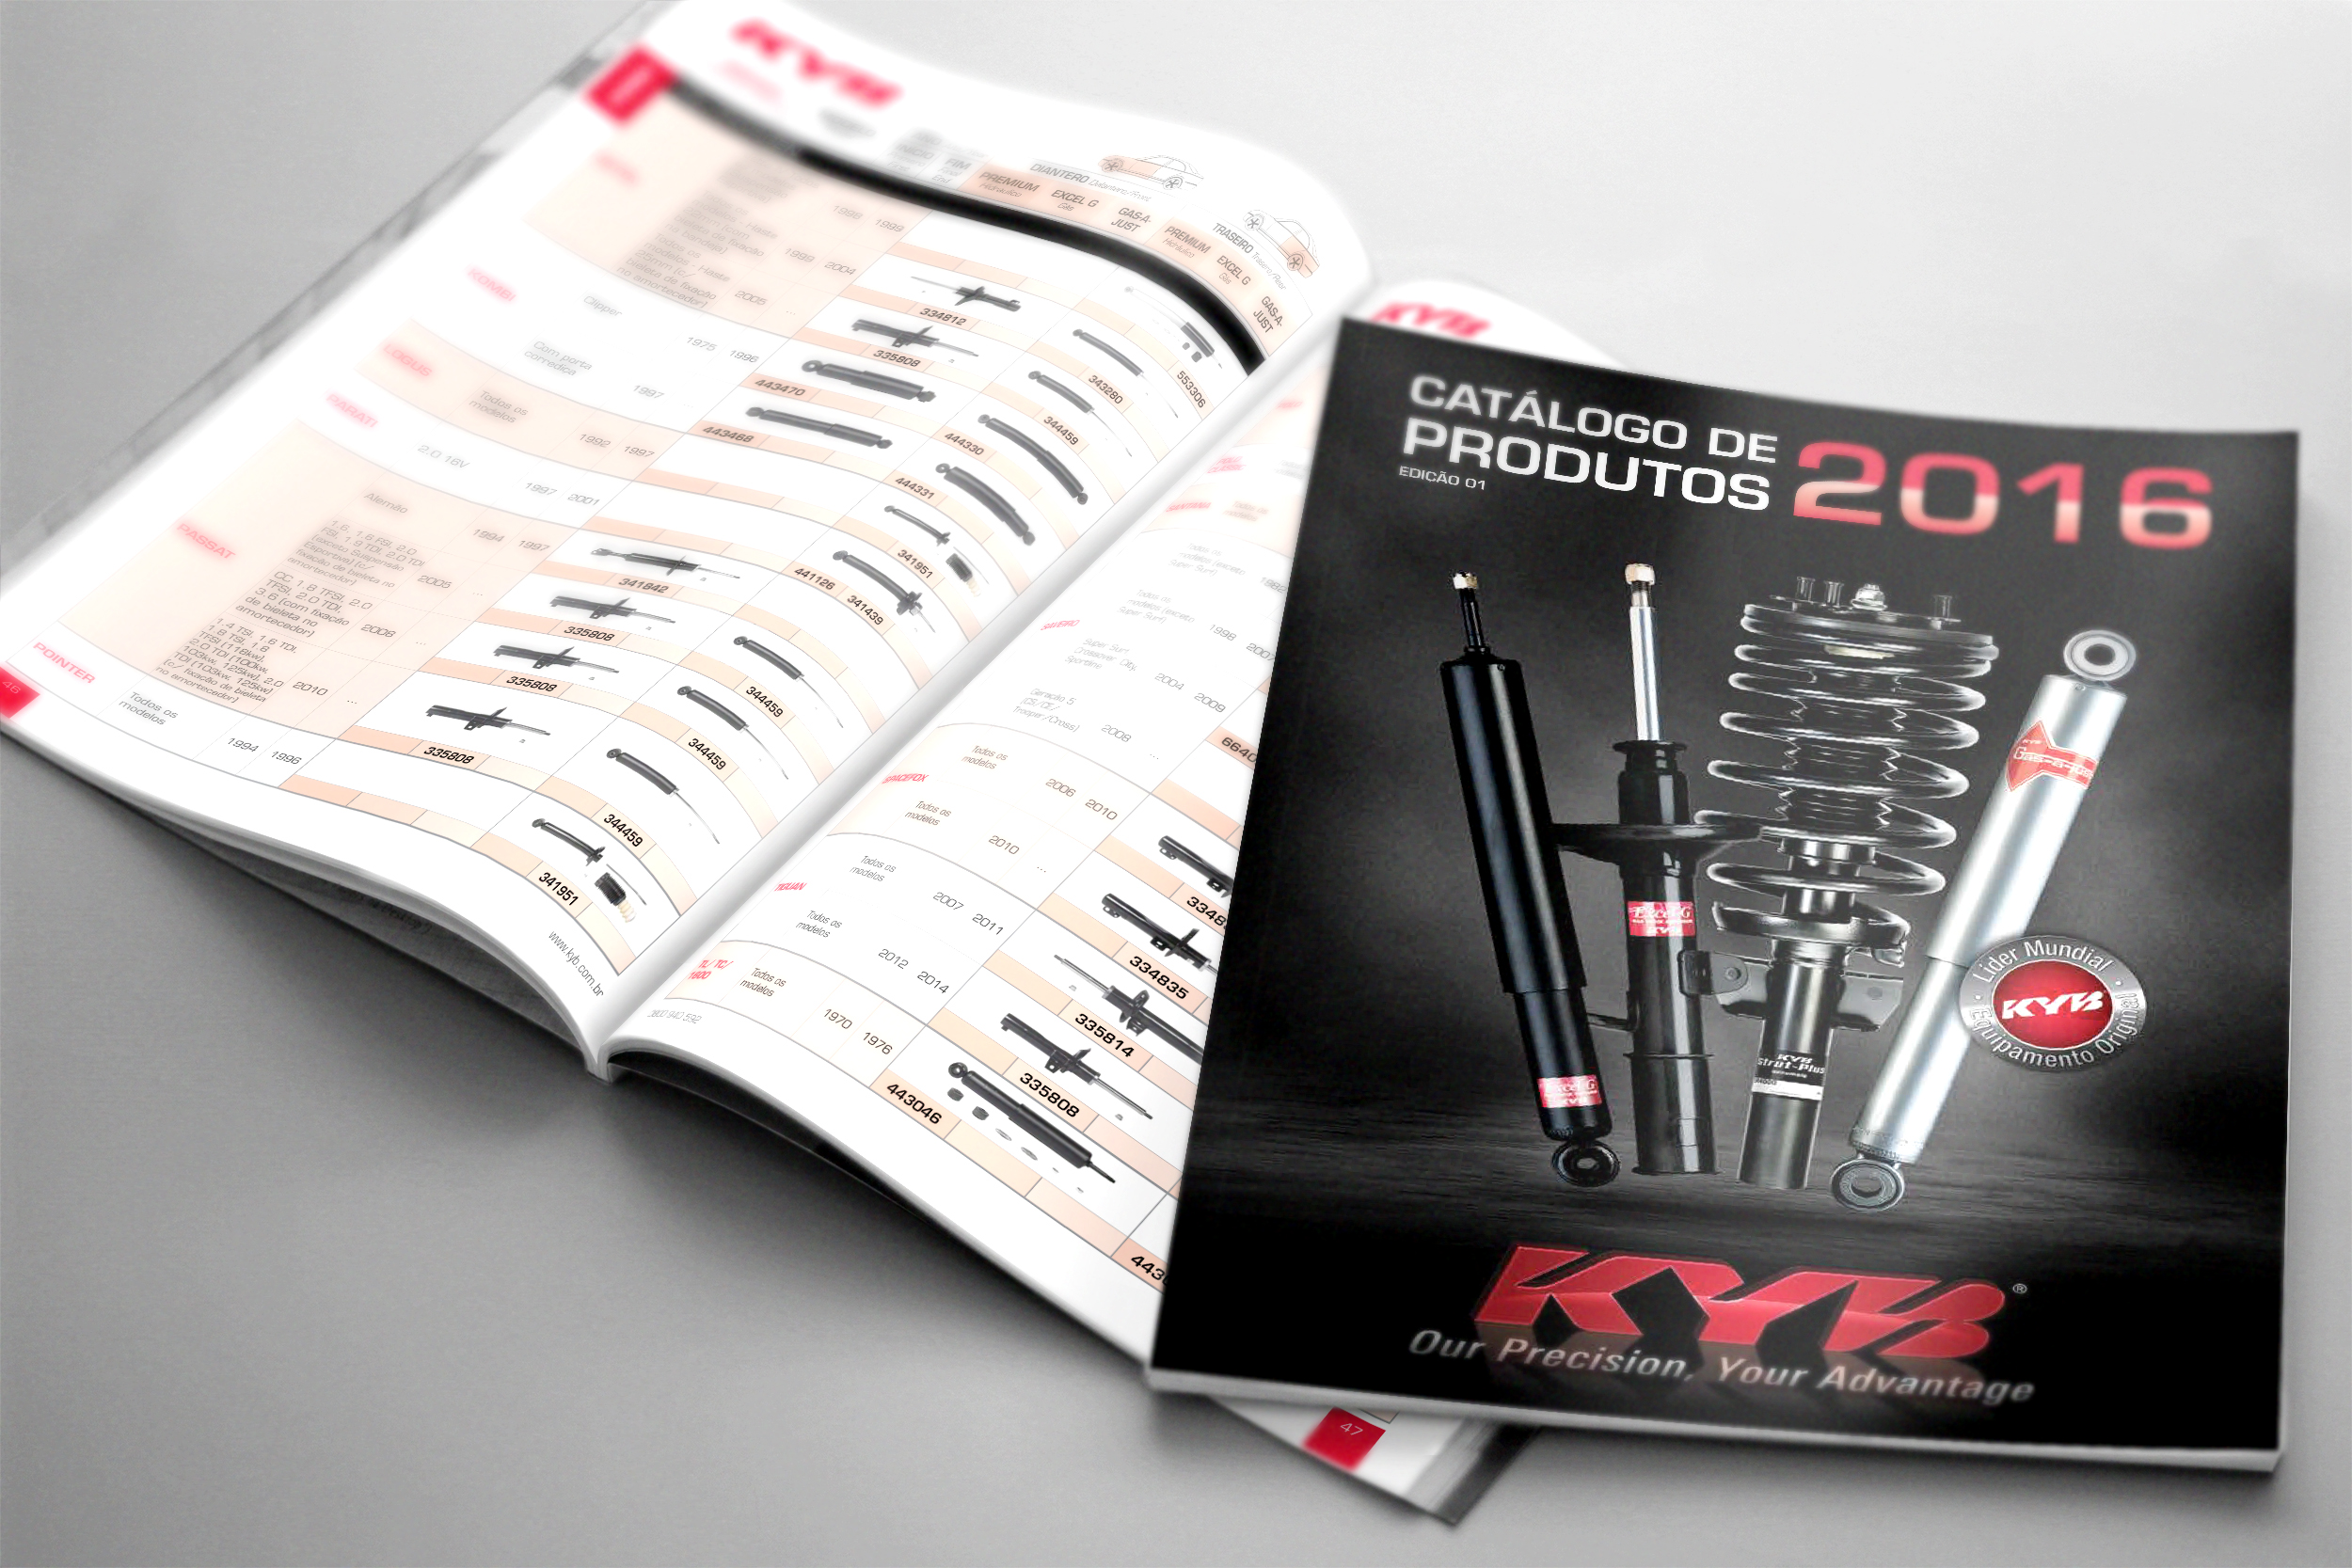 KYB - Catálogo de Produtos 2016